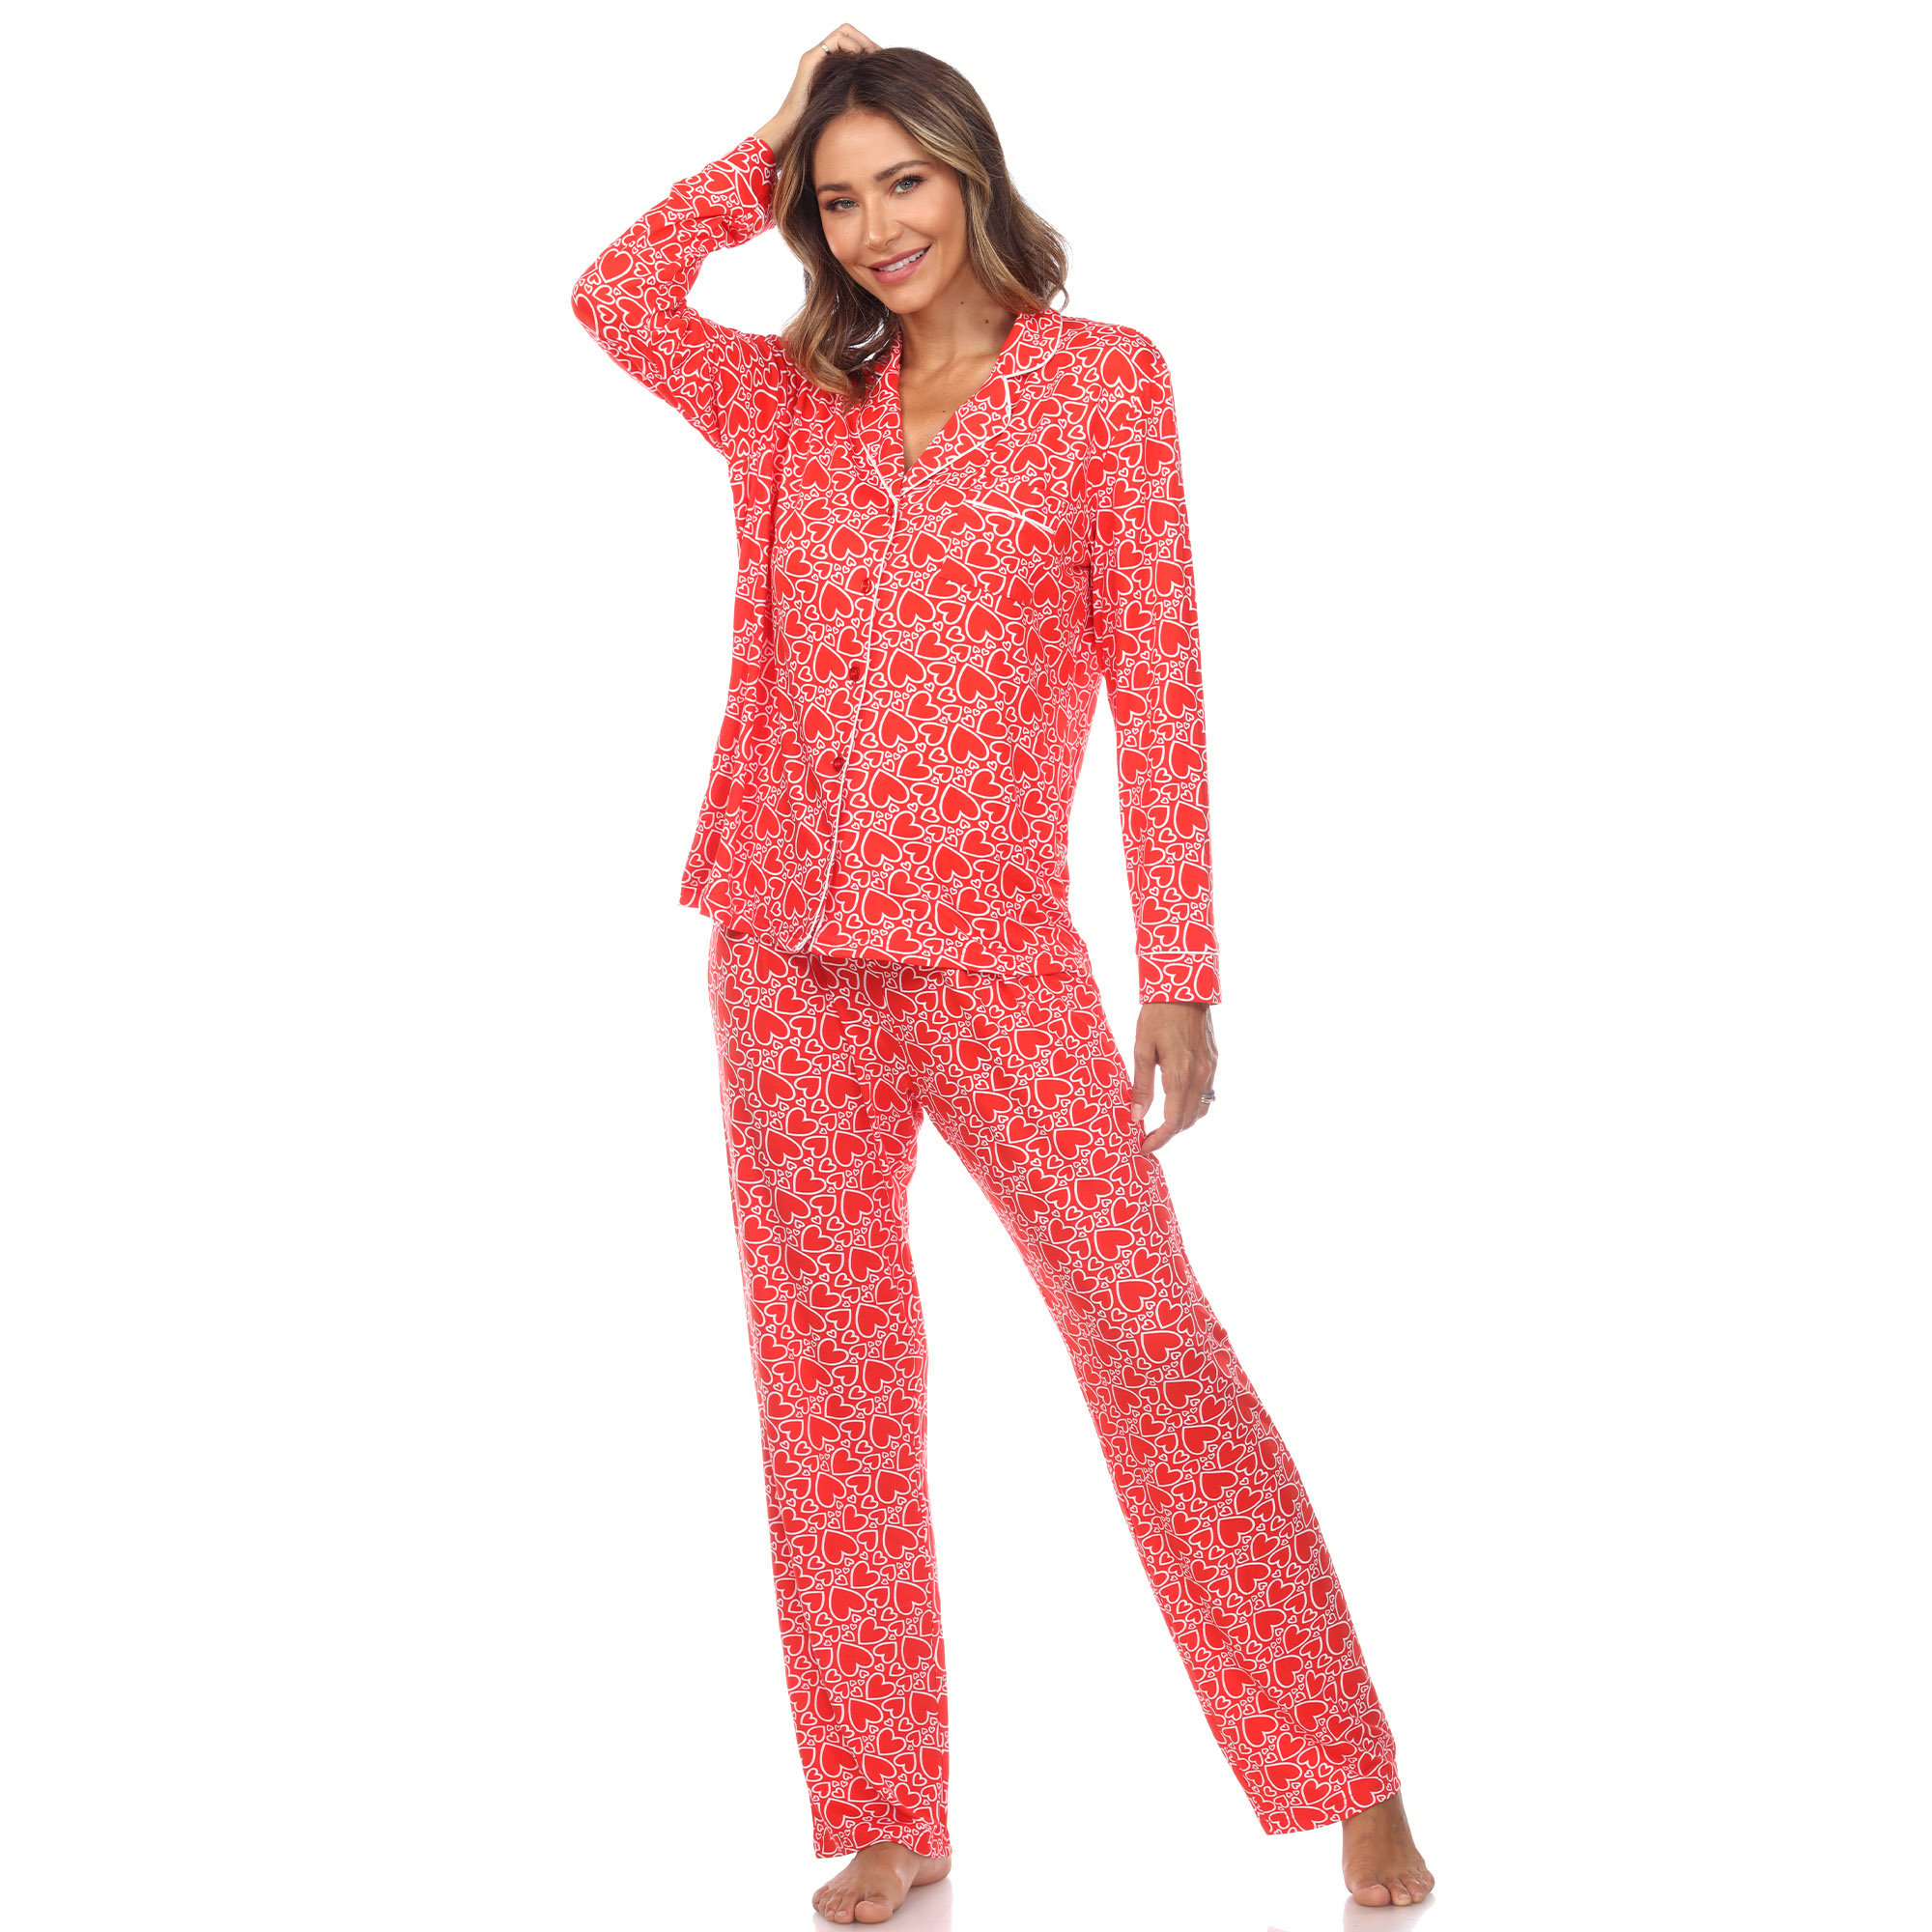 White Mark Women's Long Sleeve Hearts Pajama Set - Red, 3X